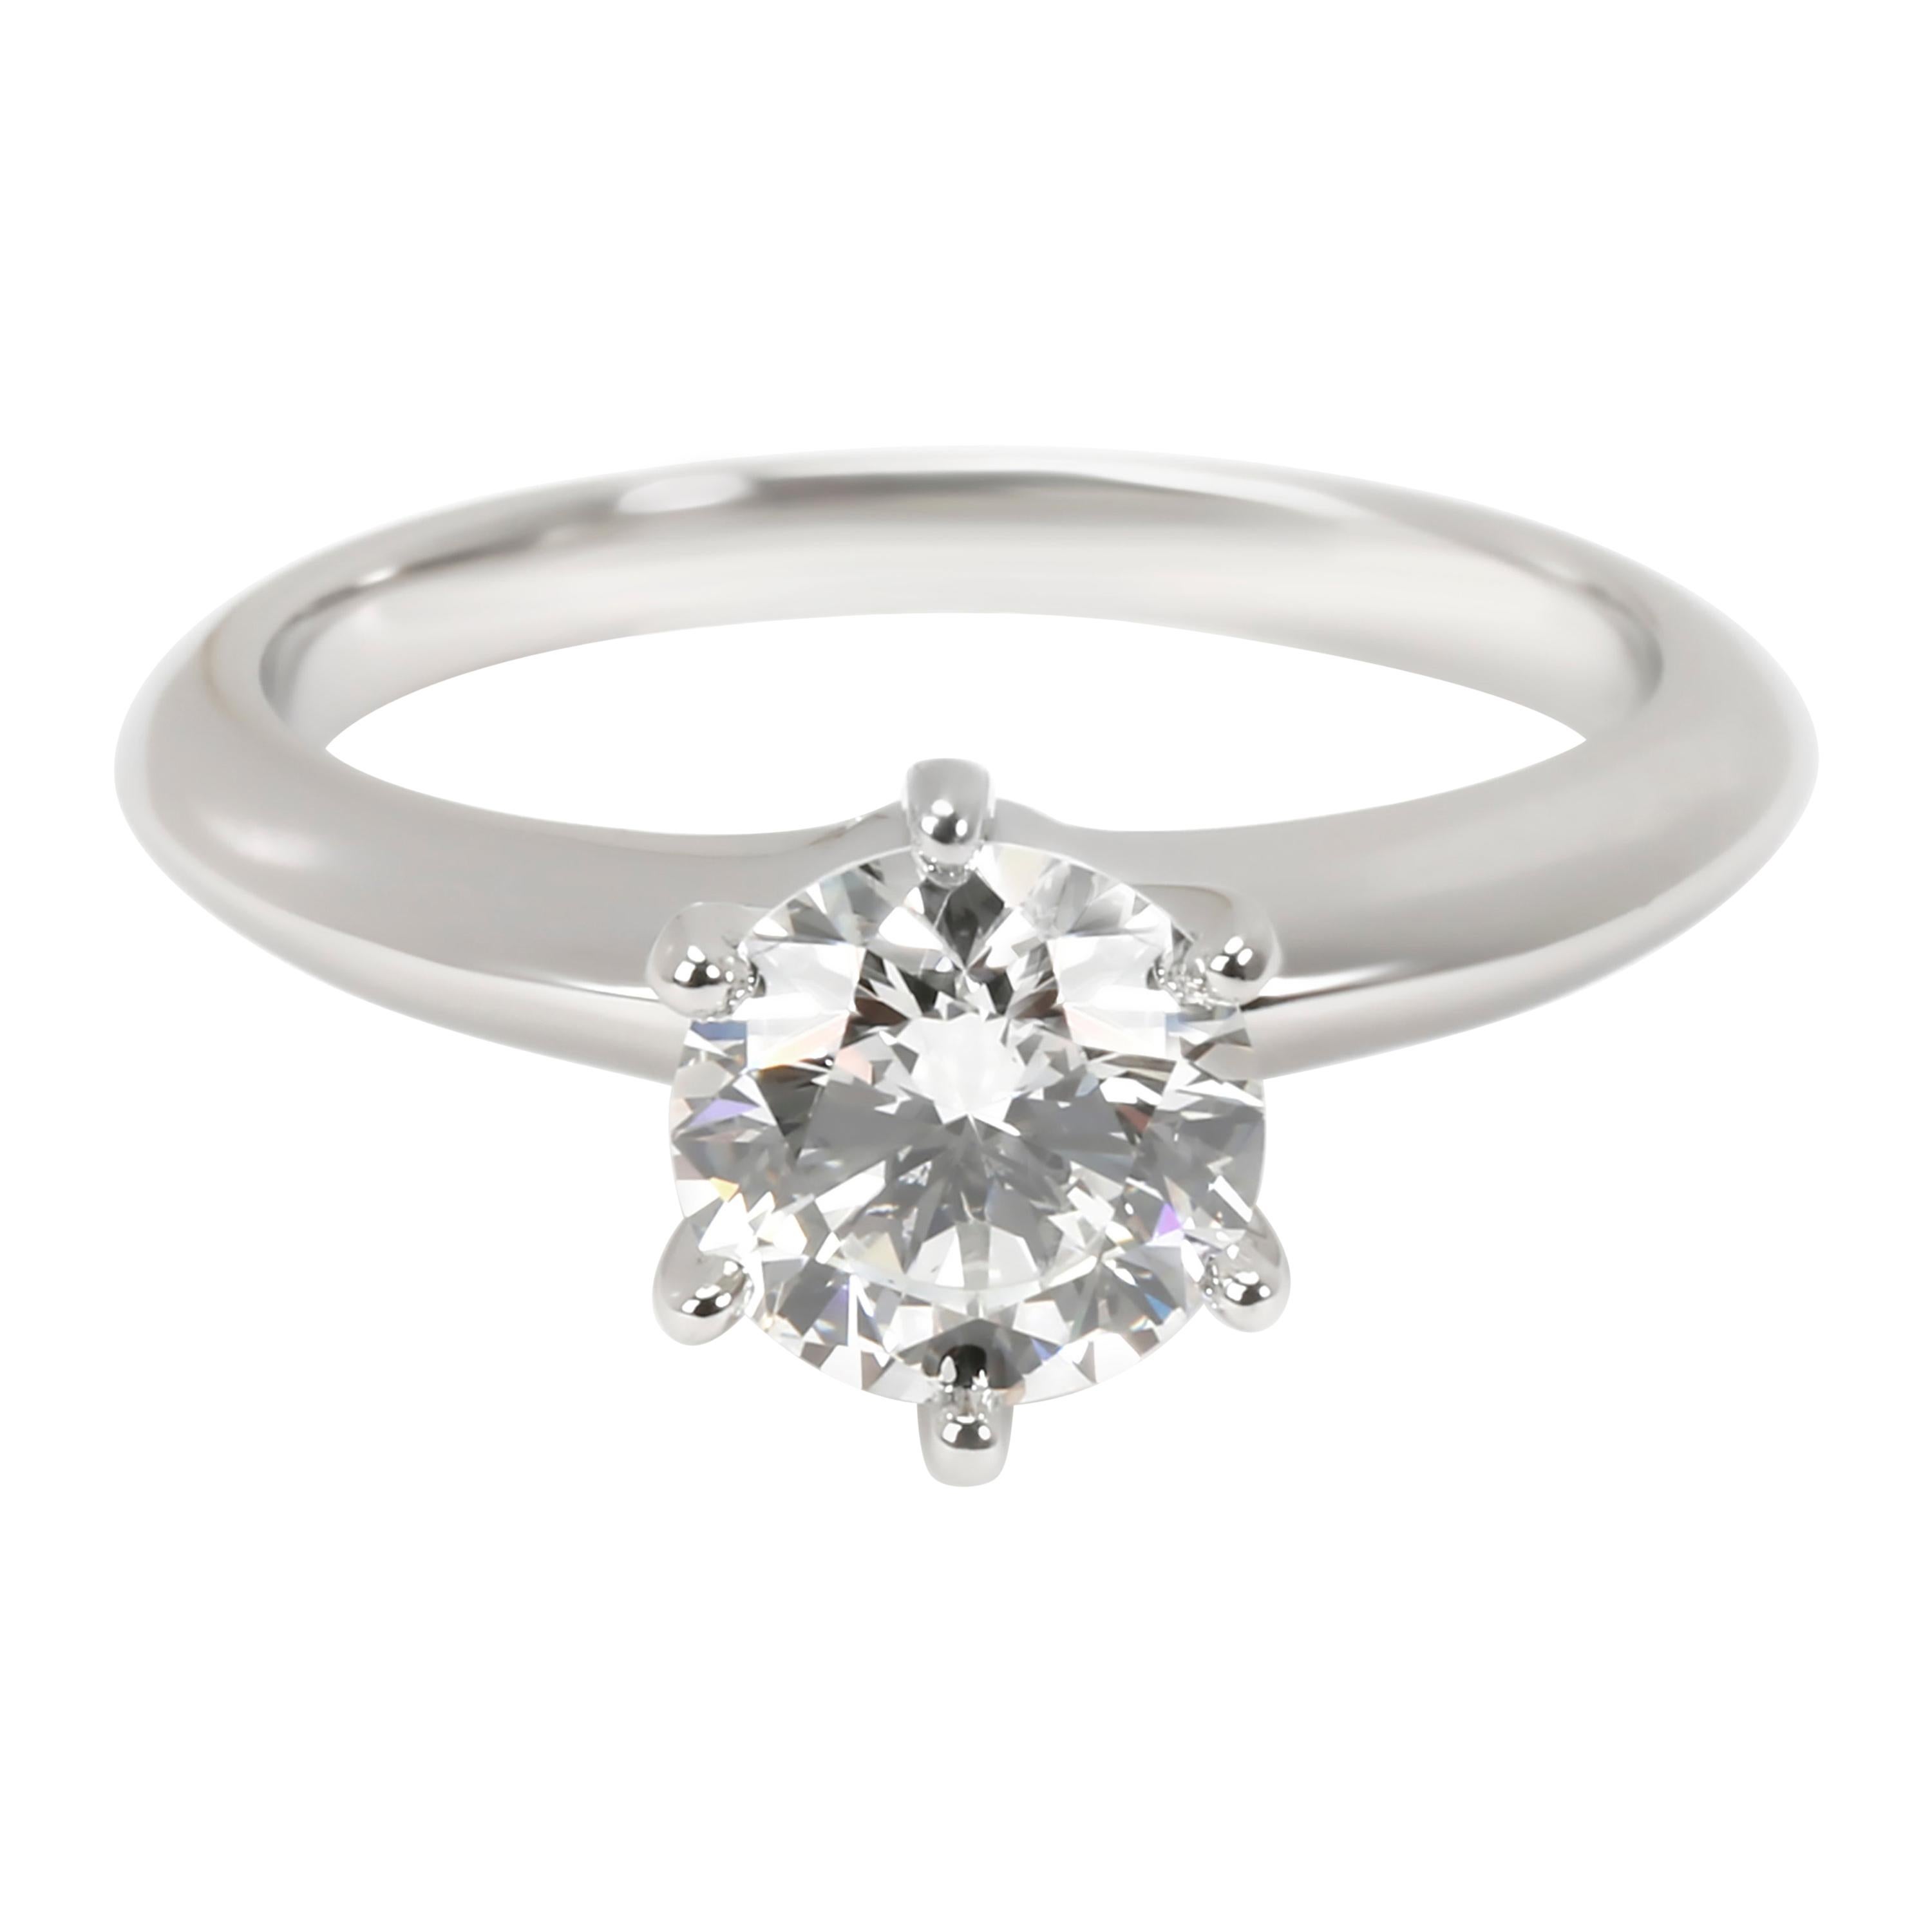 Tiffany & Co. Solitaire Diamond Engagement Ring in Platinum H VS1 1.02 Carat